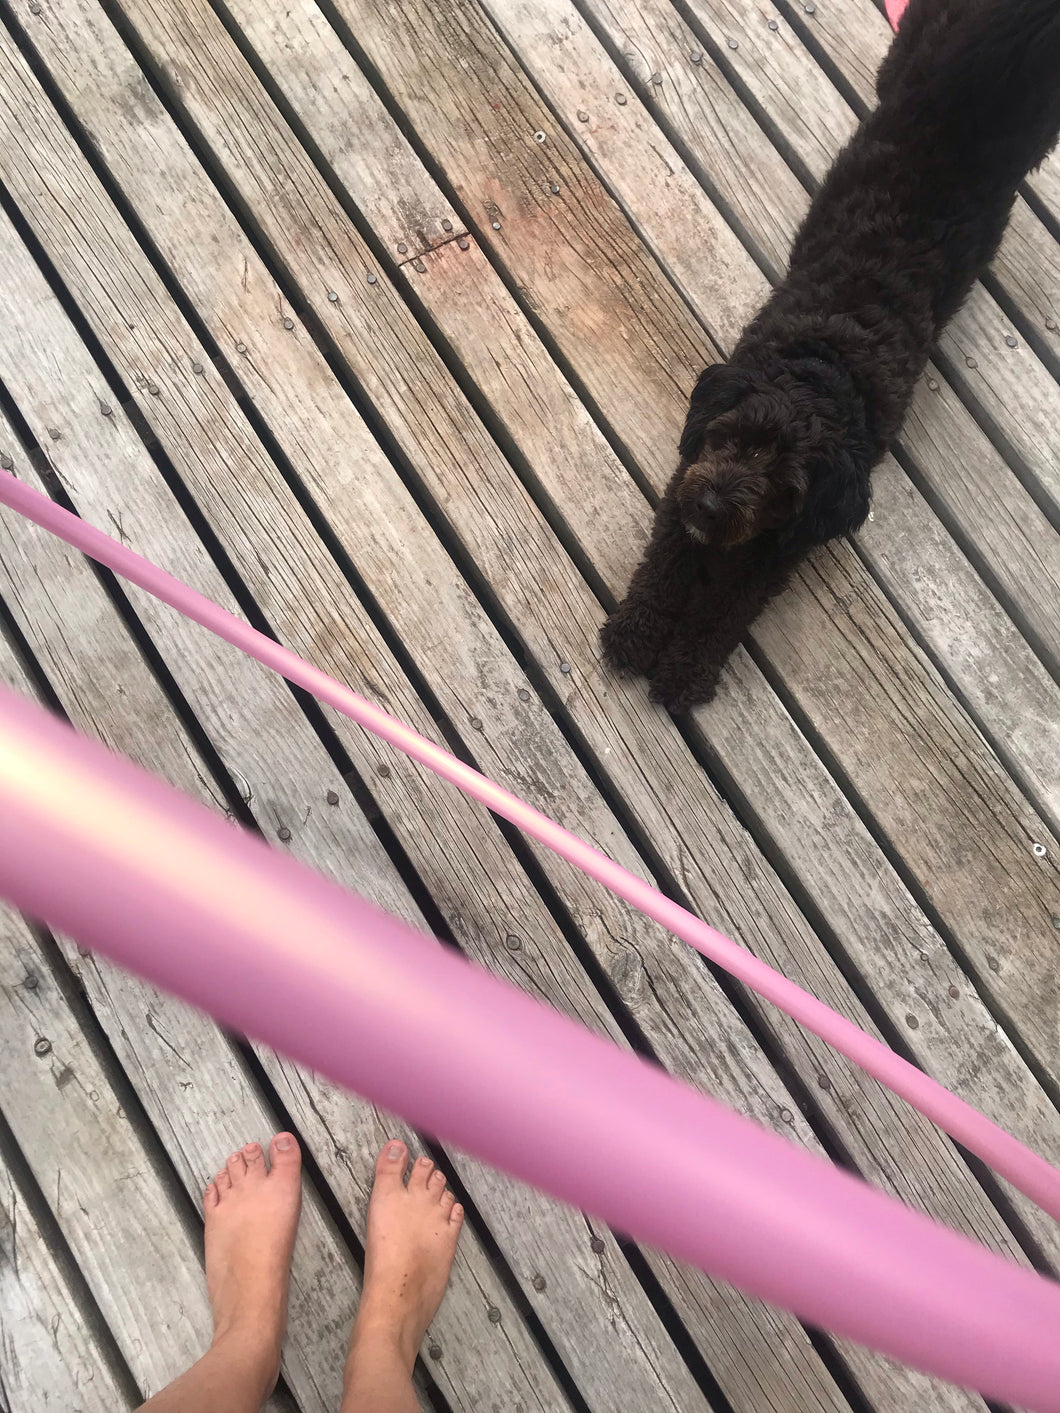 Bubblegum pink hula hoop with a cute happy dog